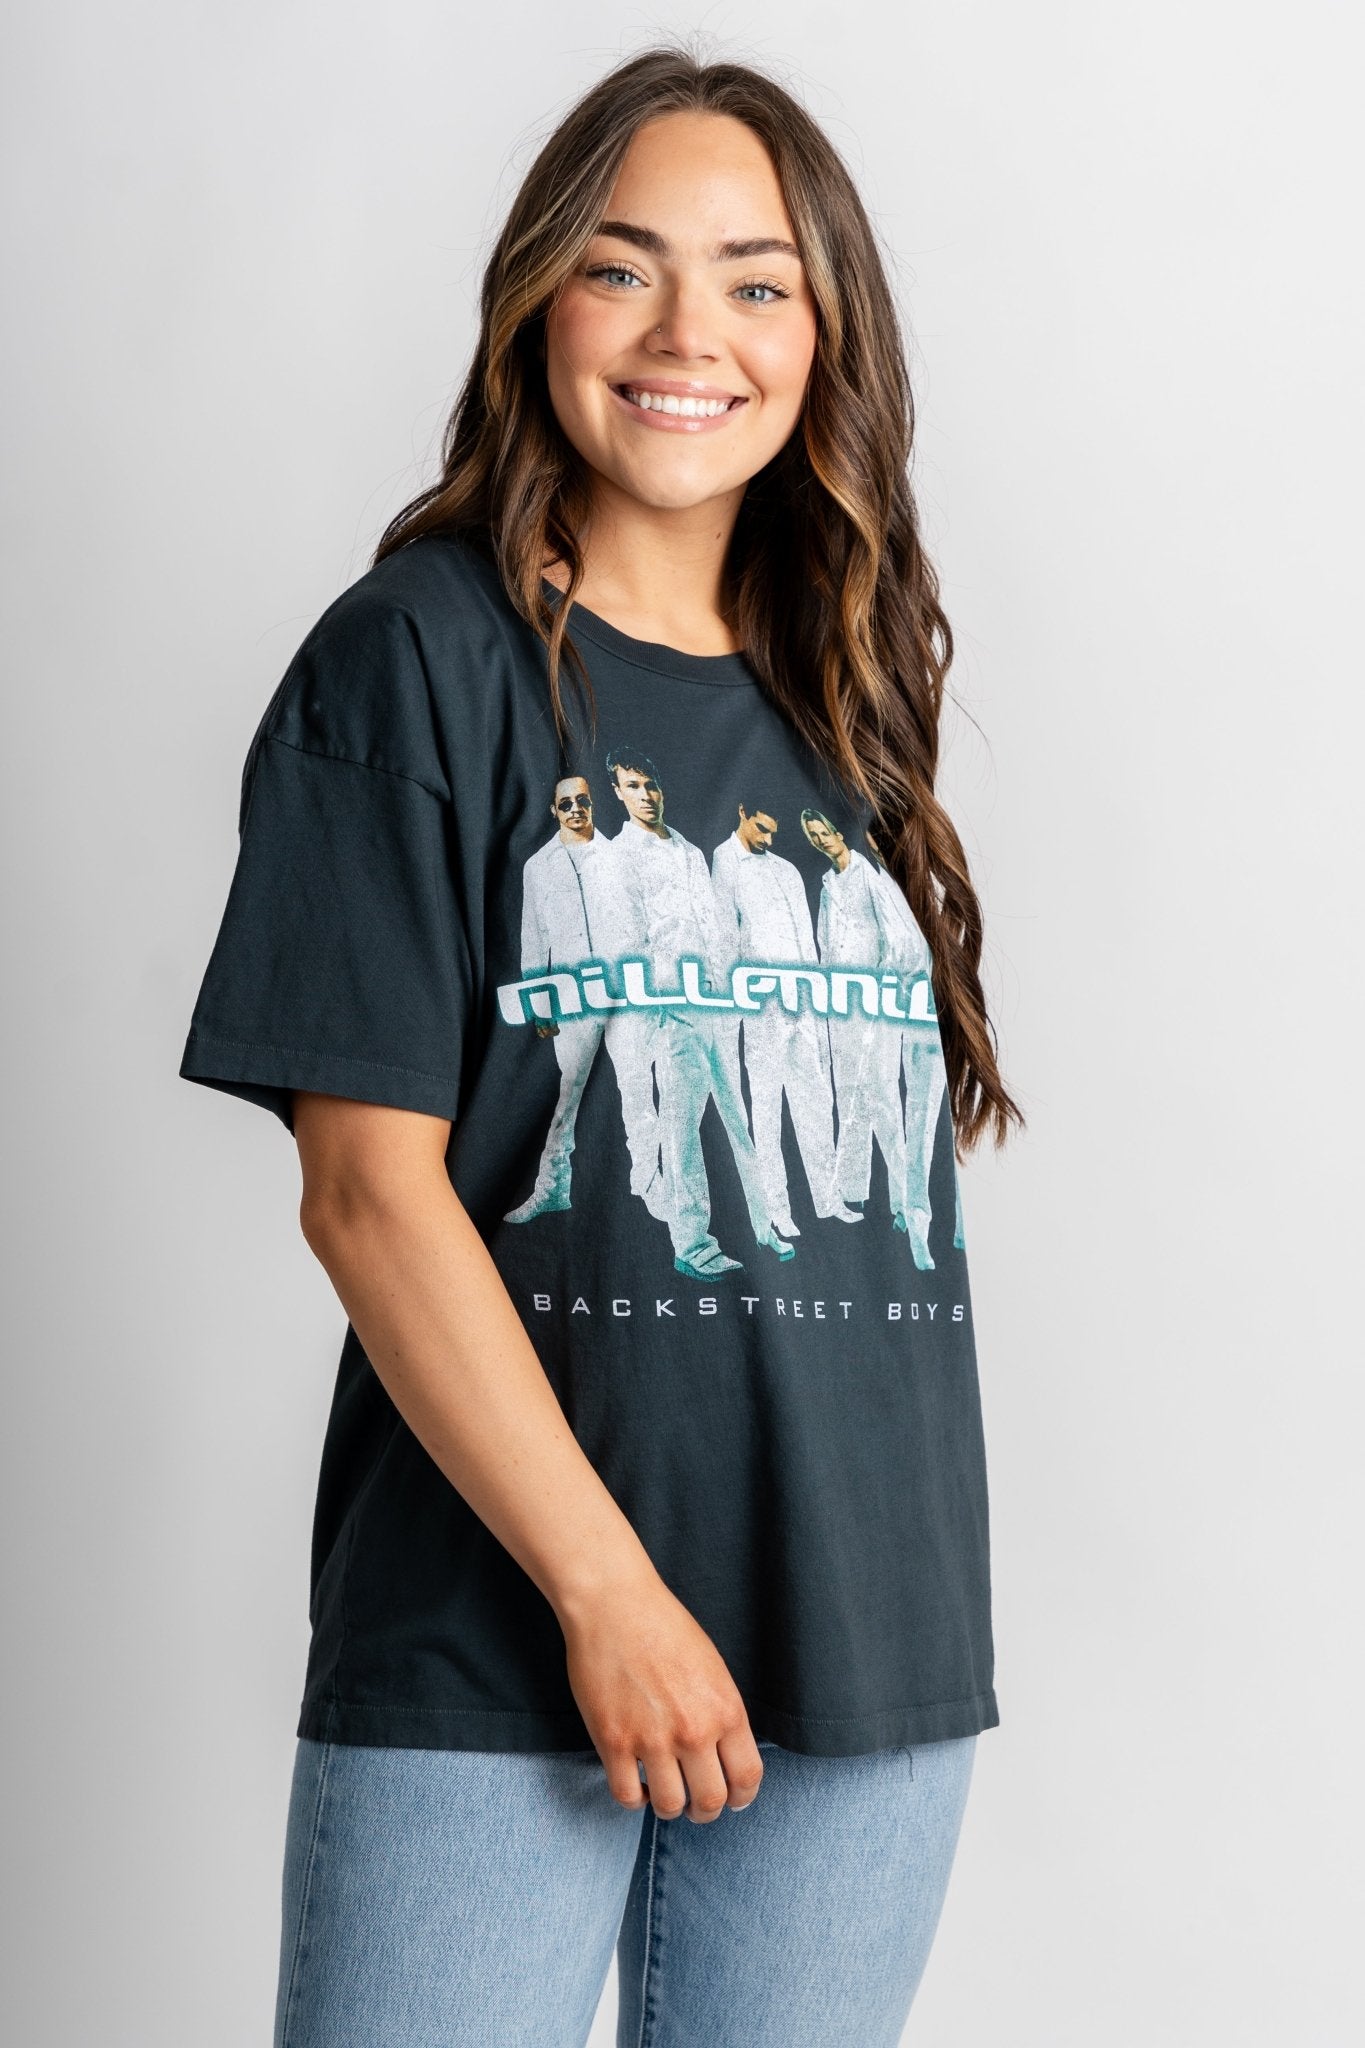 DayDreamer Backstreet Boys Millennium tee vintage black - Stylish Band T-Shirts and Sweatshirts at Lush Fashion Lounge Boutique in Oklahoma City